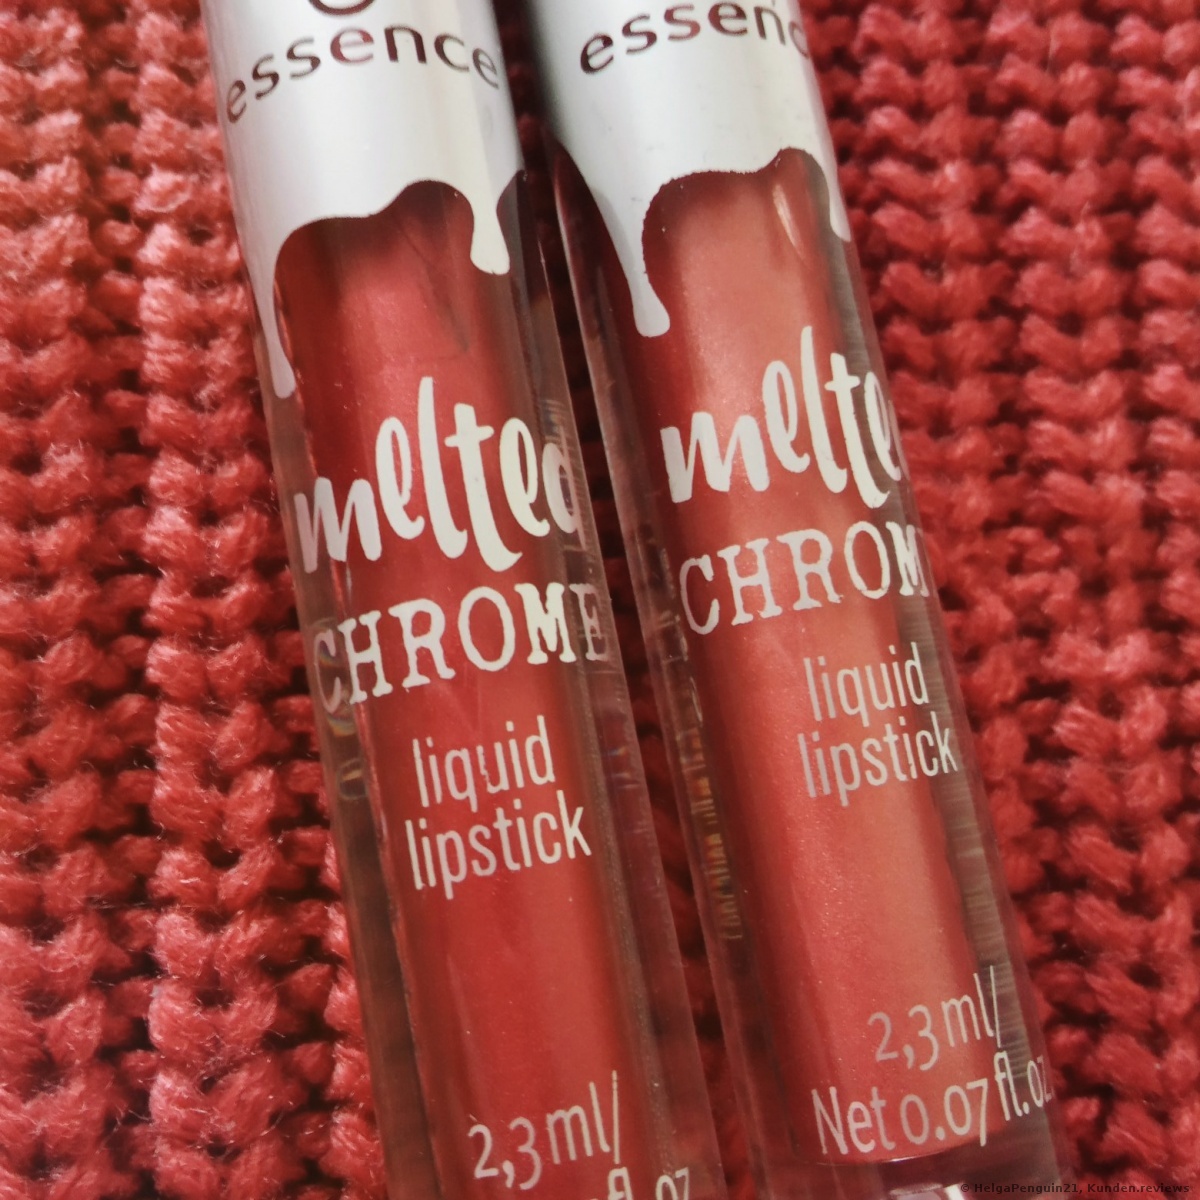 Melted Chrome Liquid Lipstick Essence